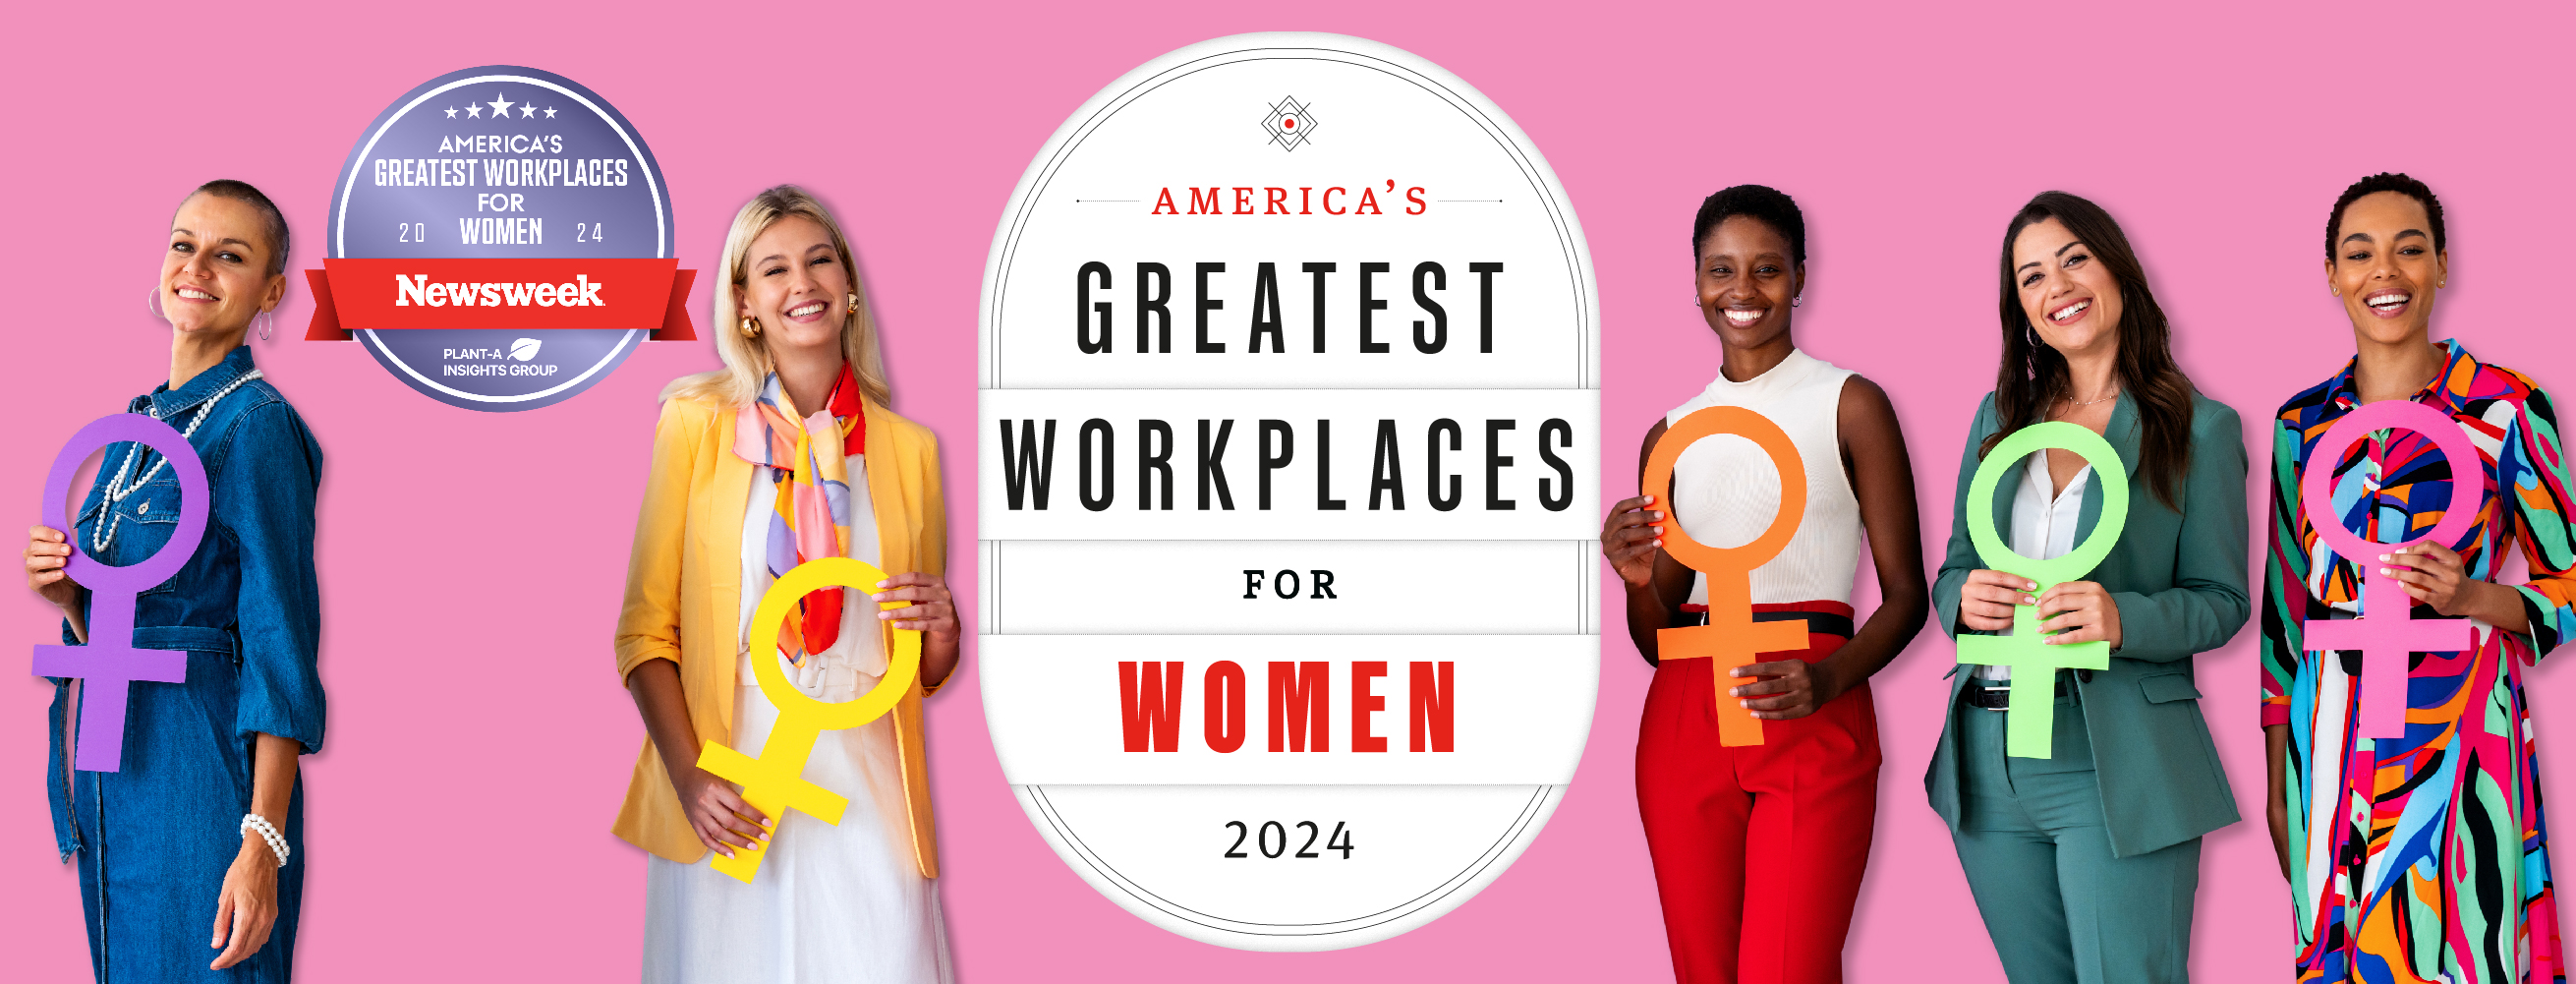 America's Greatest Workplaces for Women 2024 Newsweek Rankings